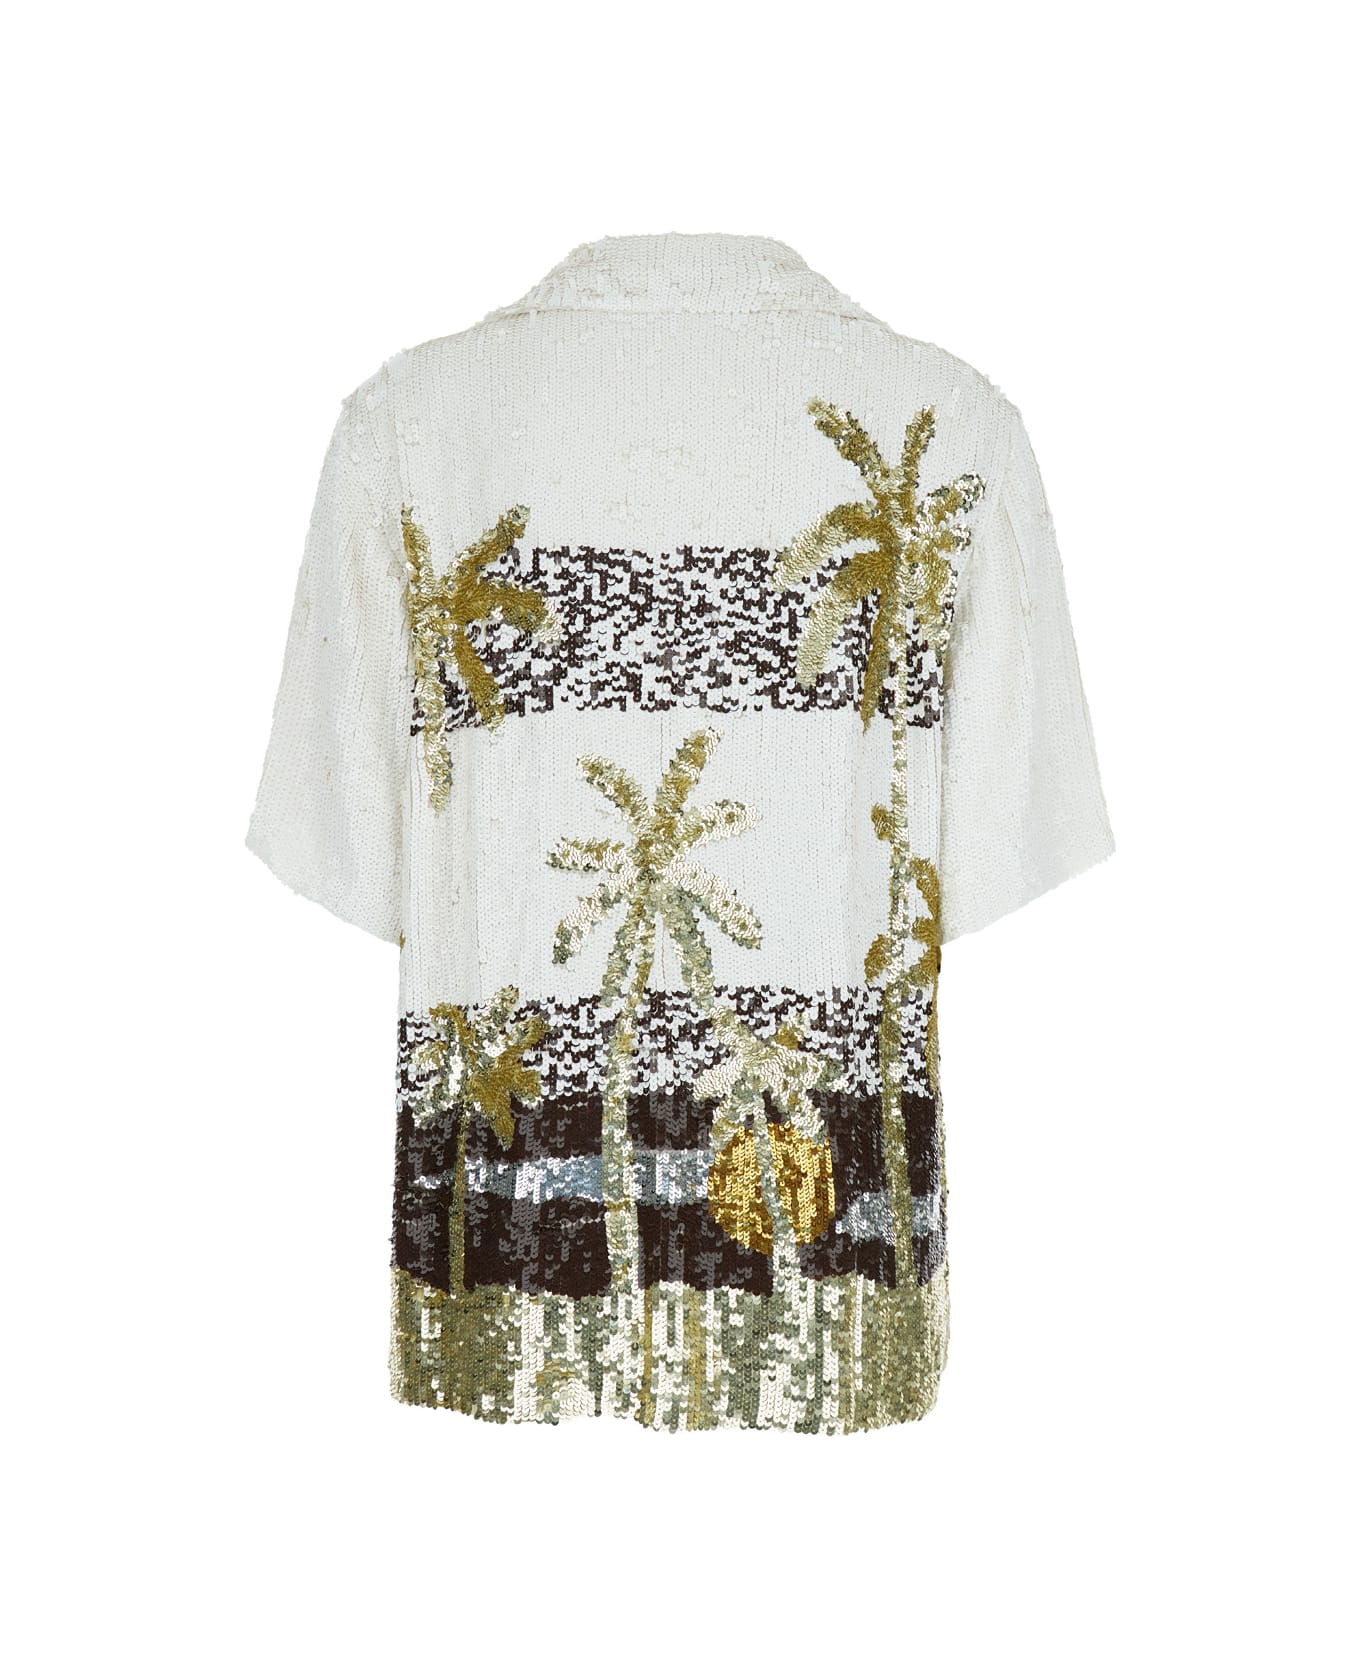 Parosh Blue Tropical Patterns Casual Style Short Sleeves Shirt - White Print